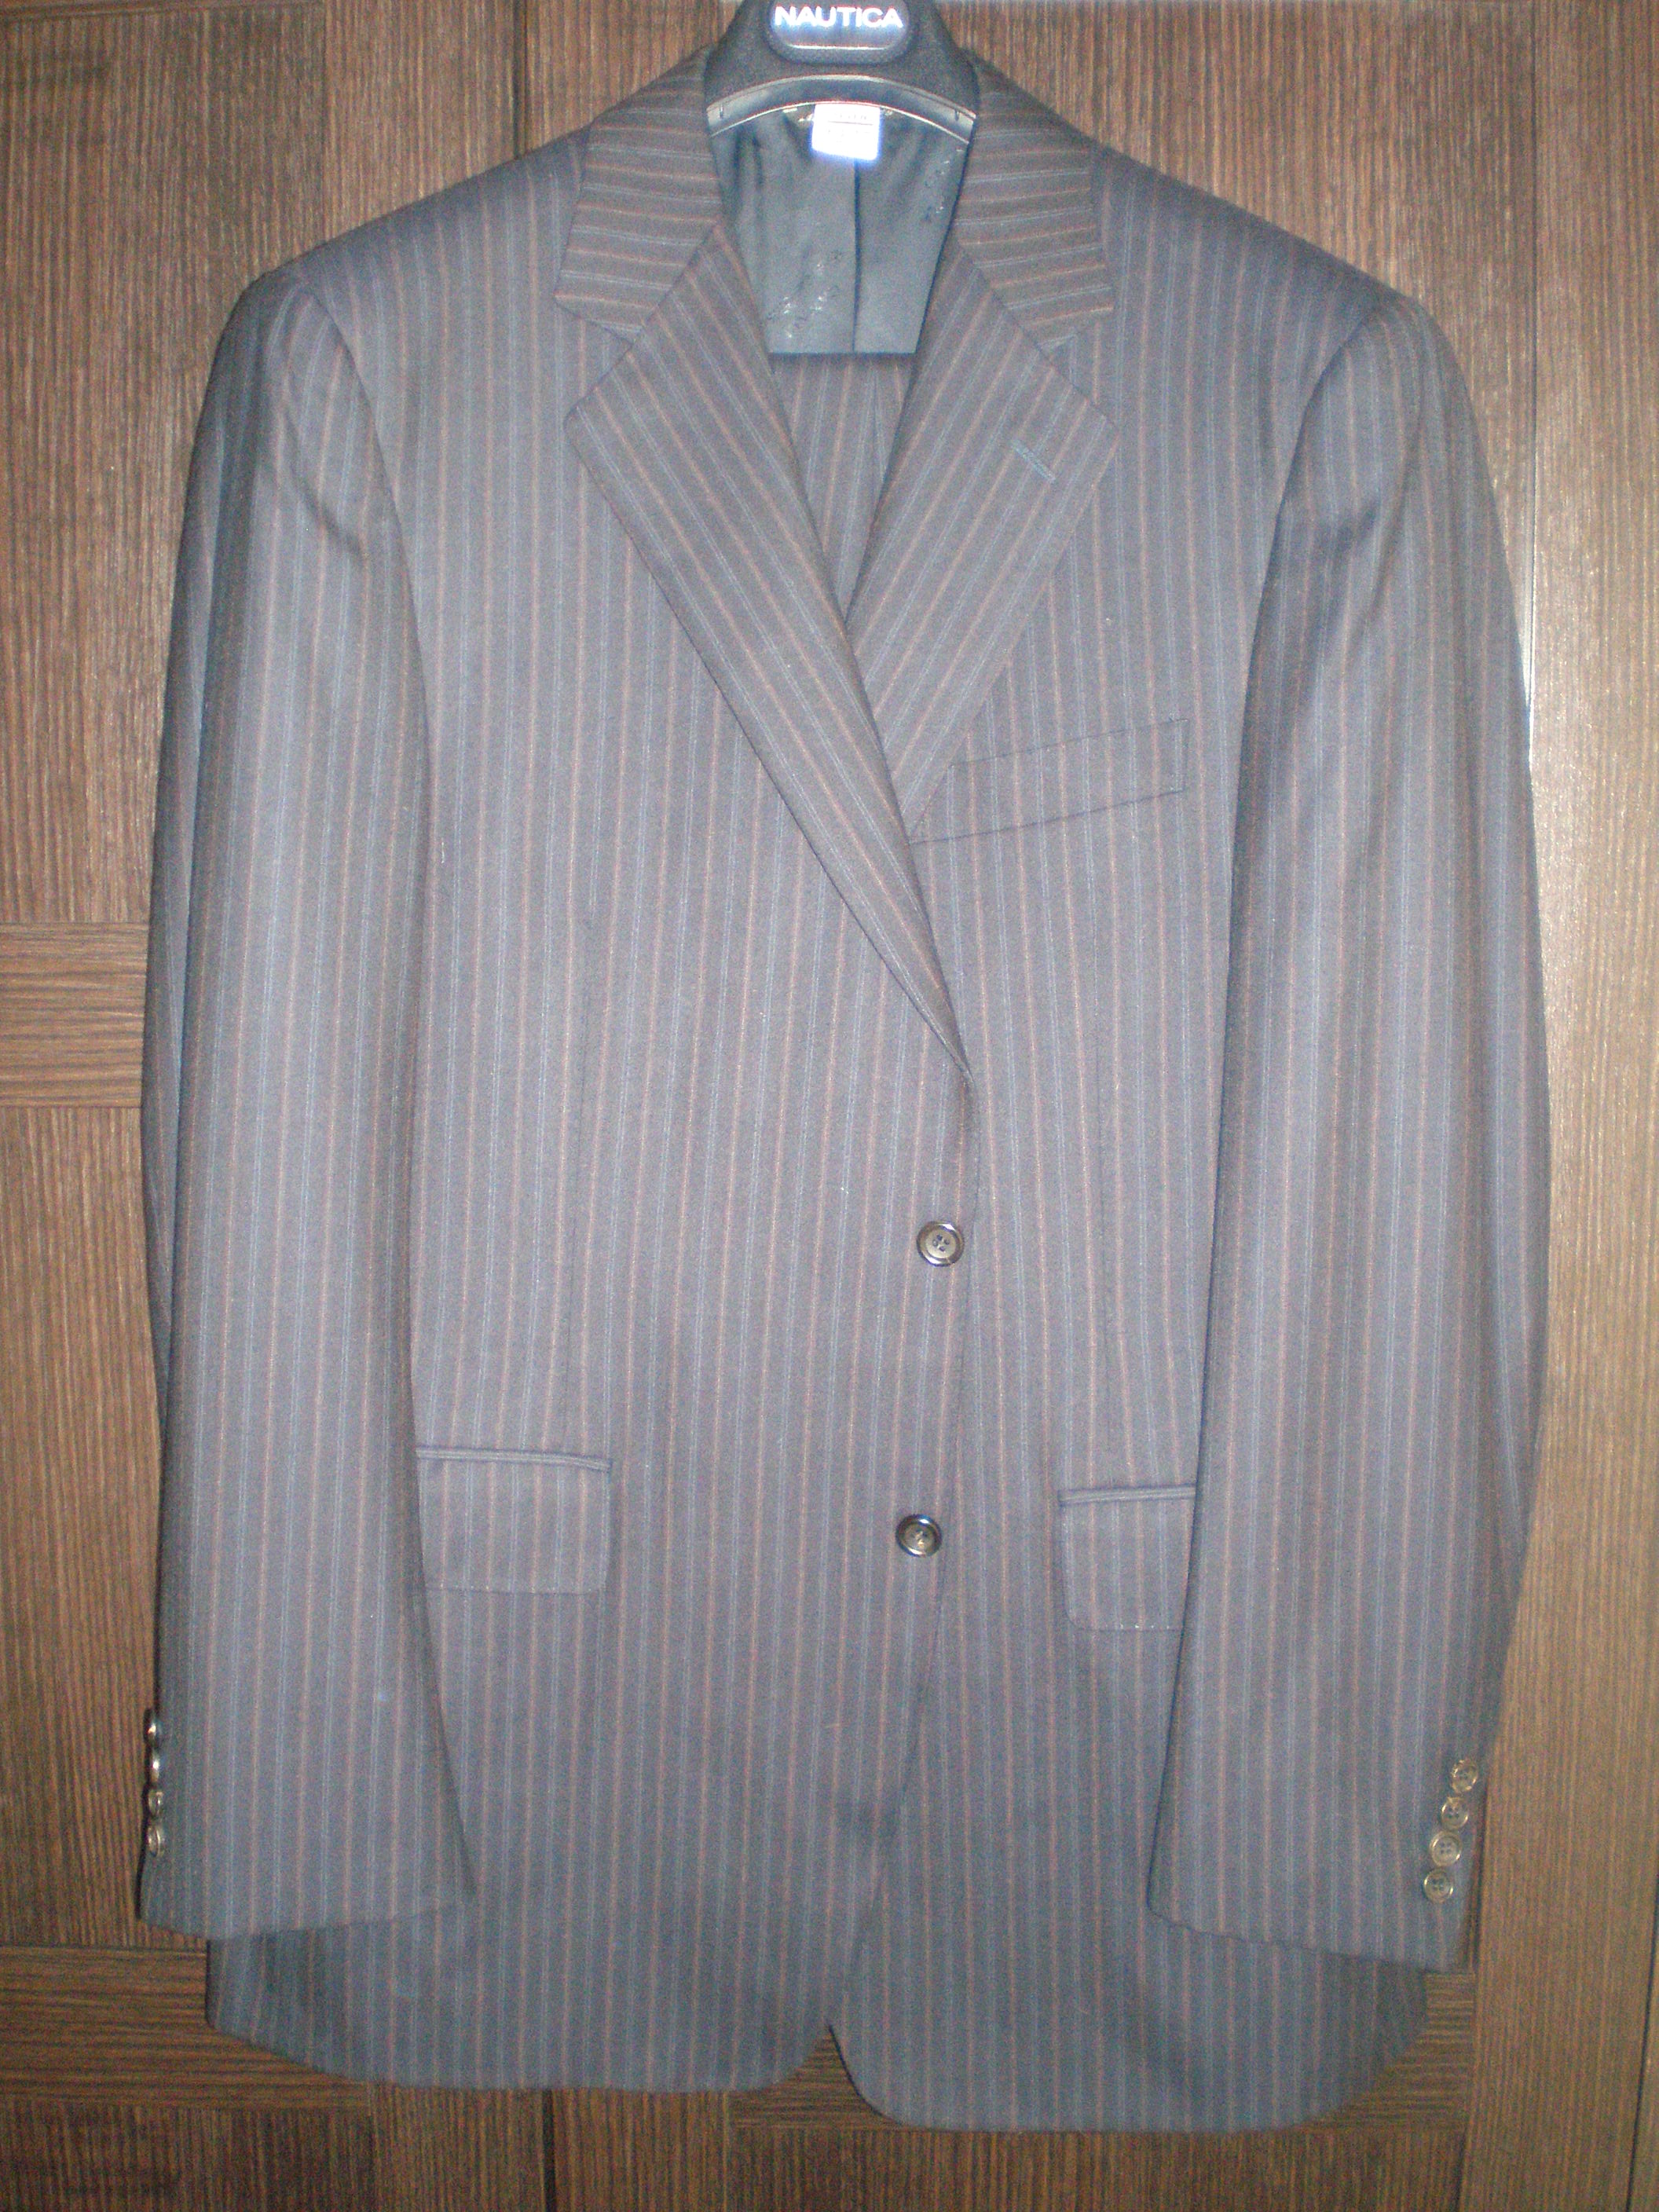 CANALI EXCLUSIVE Super 180s Navy Pinstripe Suit 42R L | Styleforum